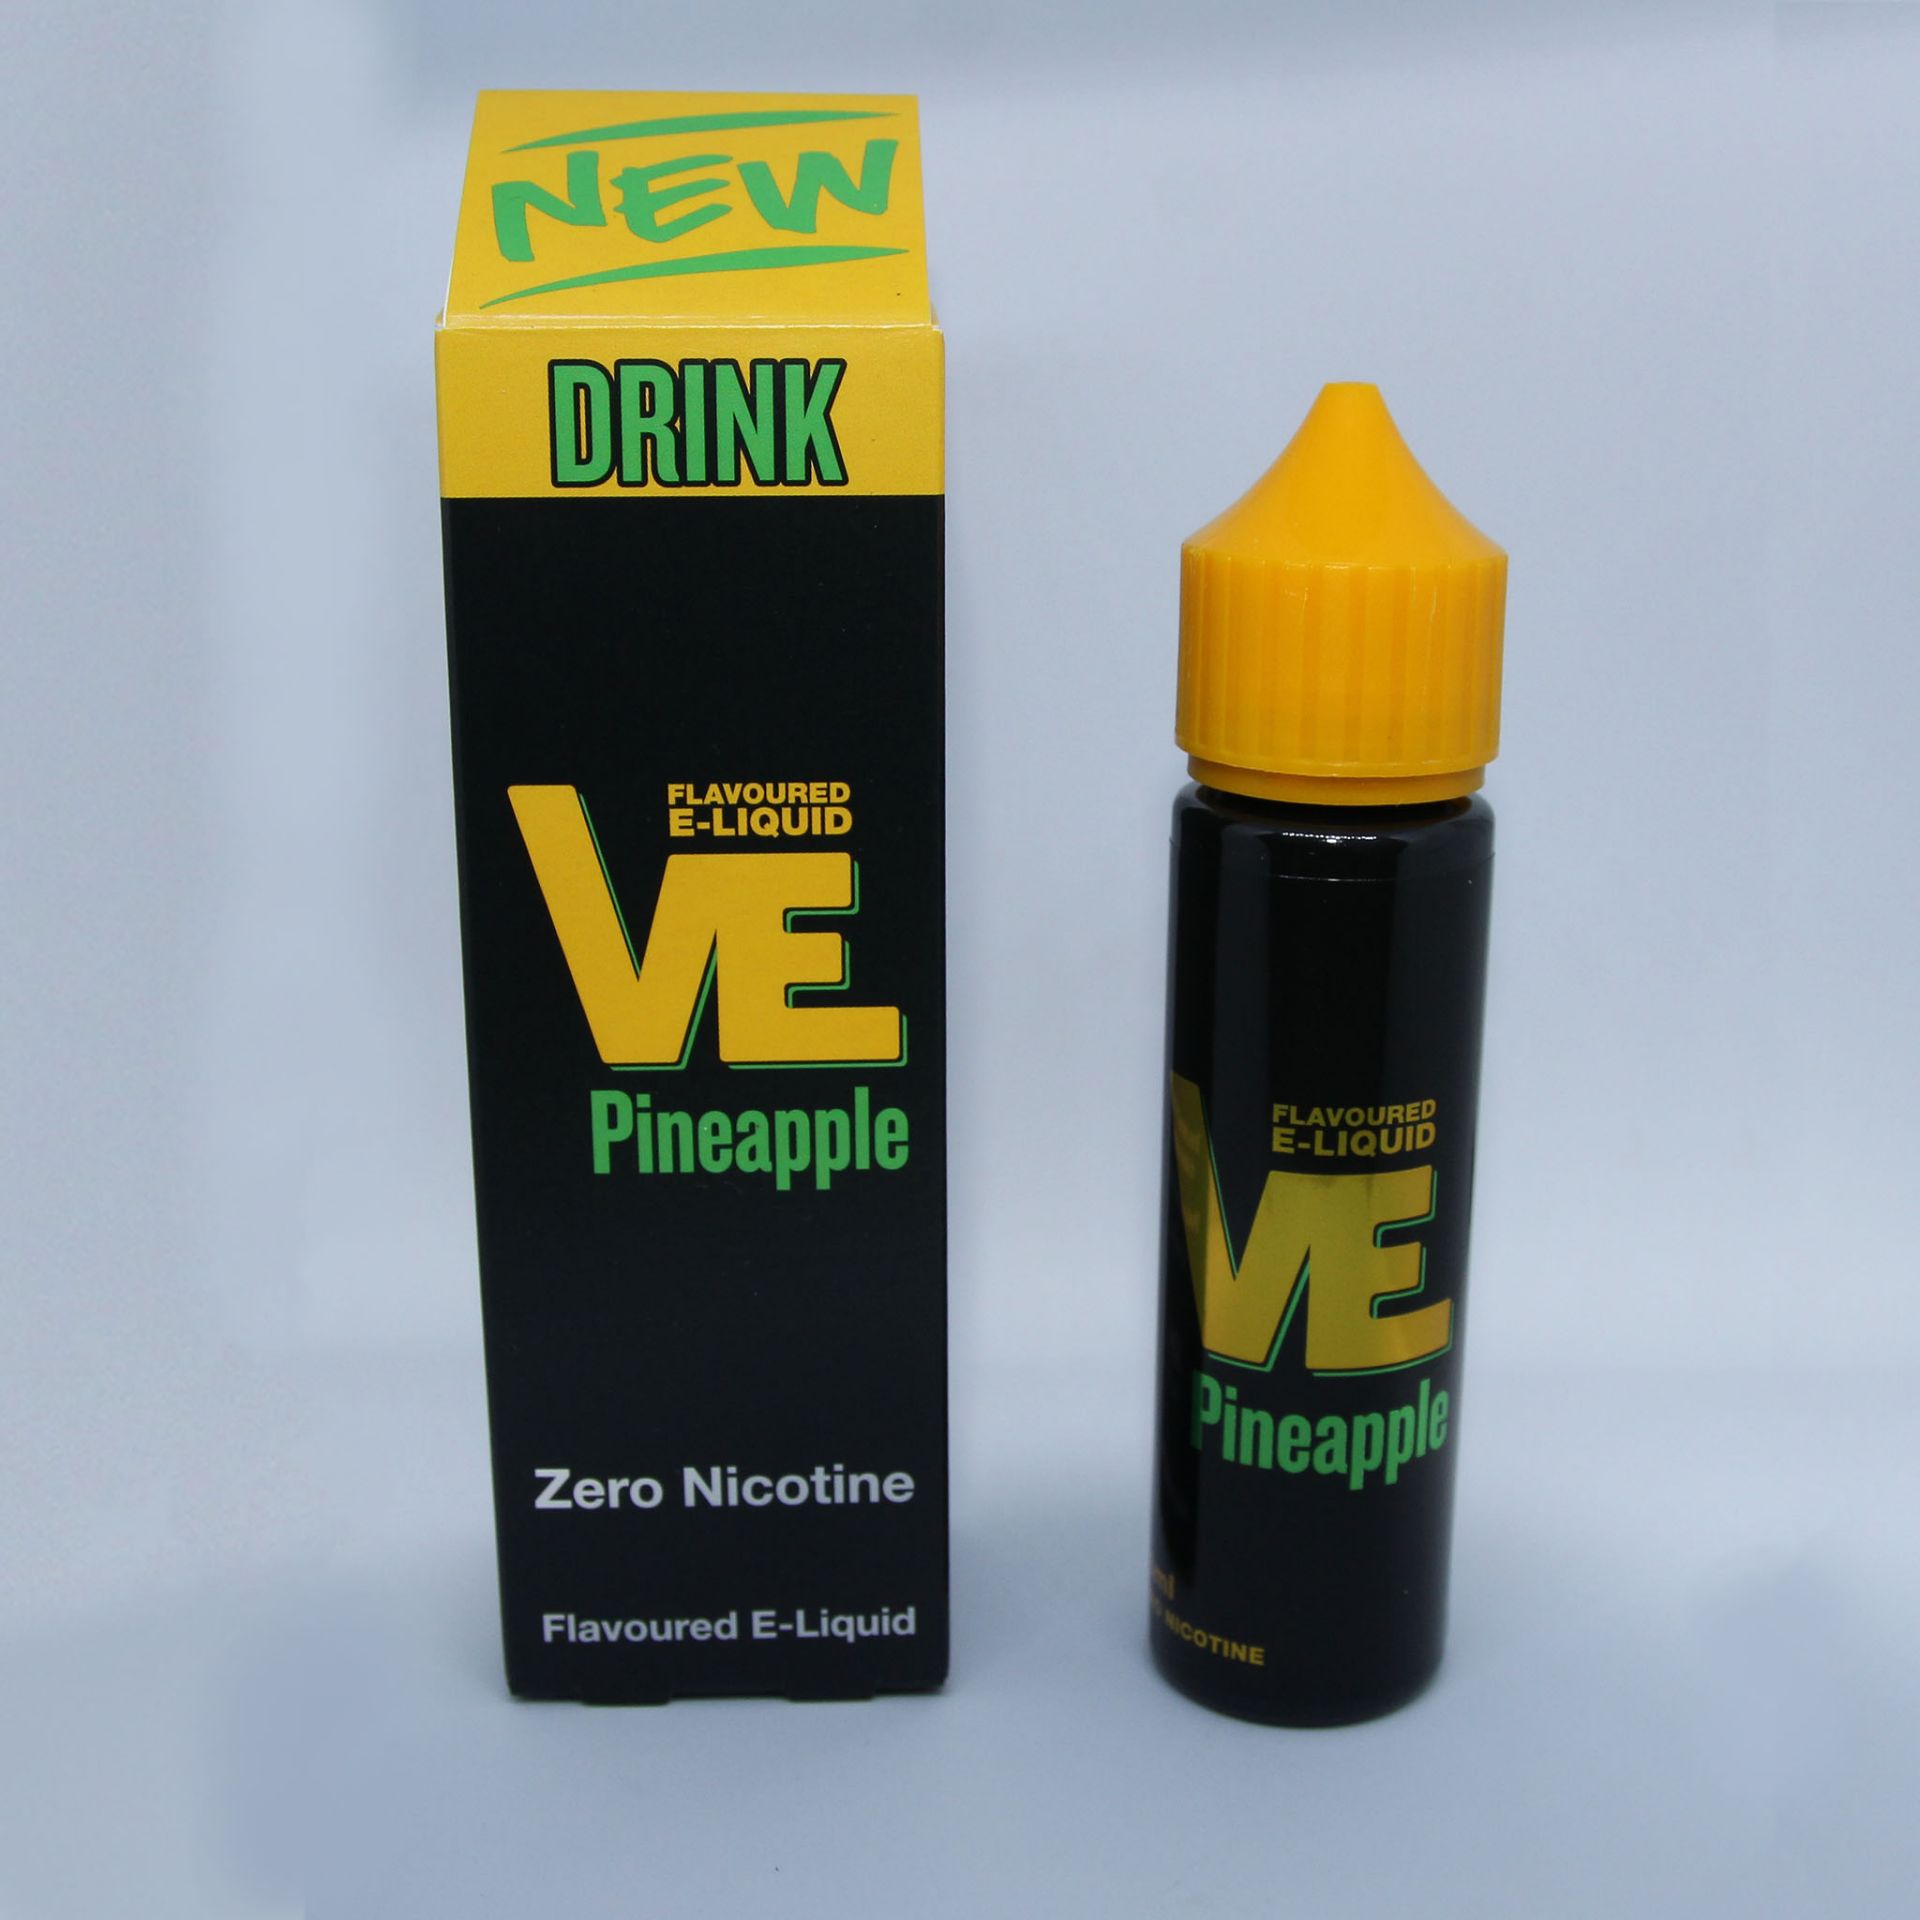 50 x Bottles of VE Flavoured E-Liquid 0mg Nicotine 50ml Shortfill Pineapple RRP £12 per unit, Produc